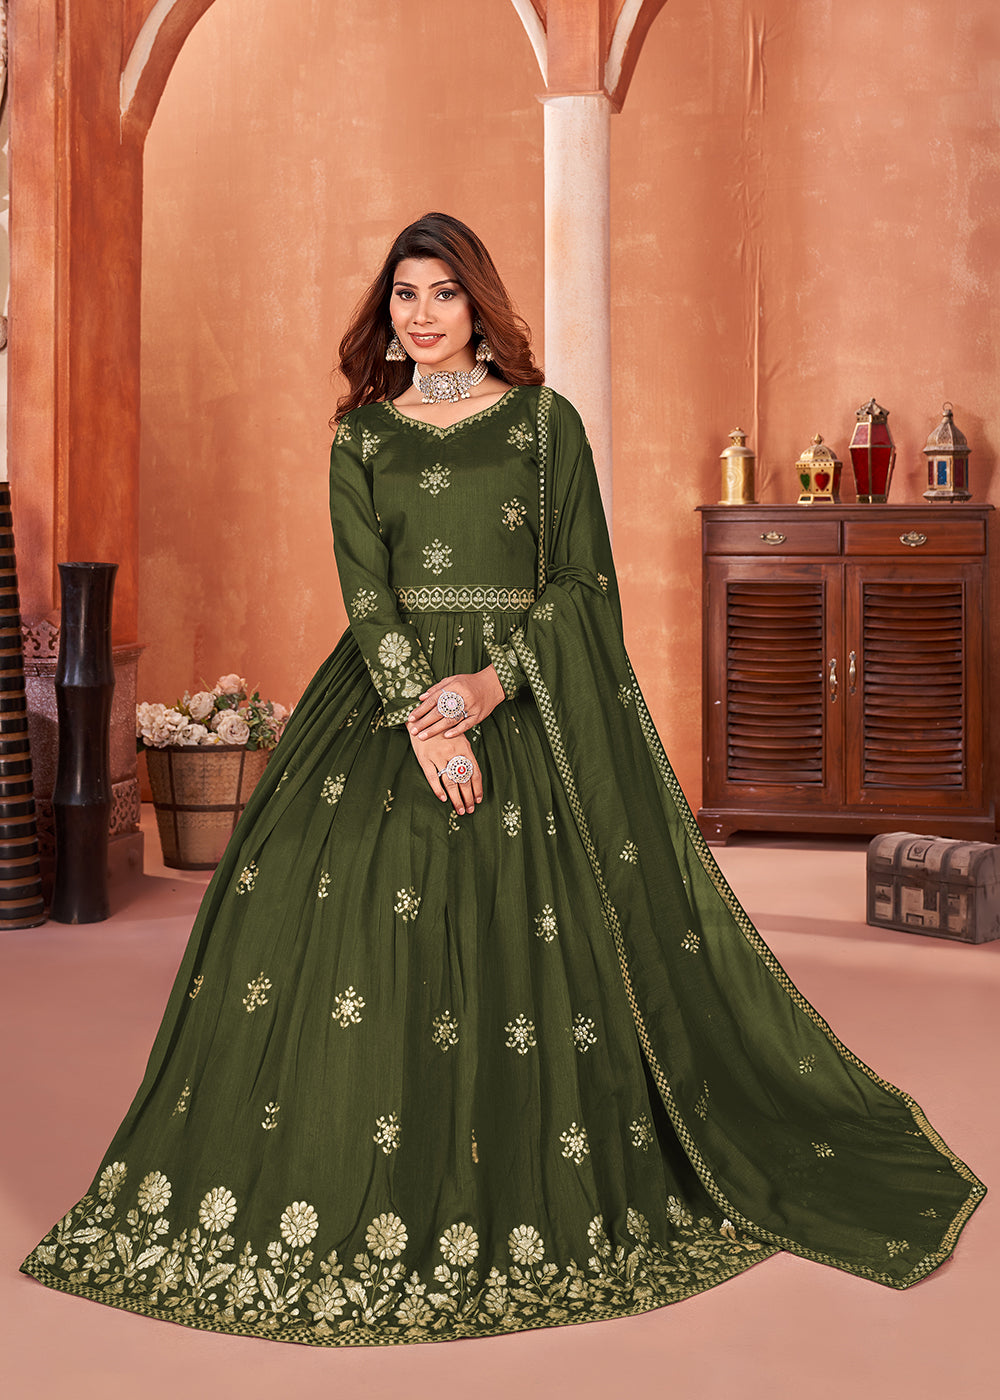 Buy Now Mehndi Green Festive Embroidered Art Silk Anarkali Suit Online in USA, UK, Australia, New Zealand, Canada & Worldwide at Empress Clothing.